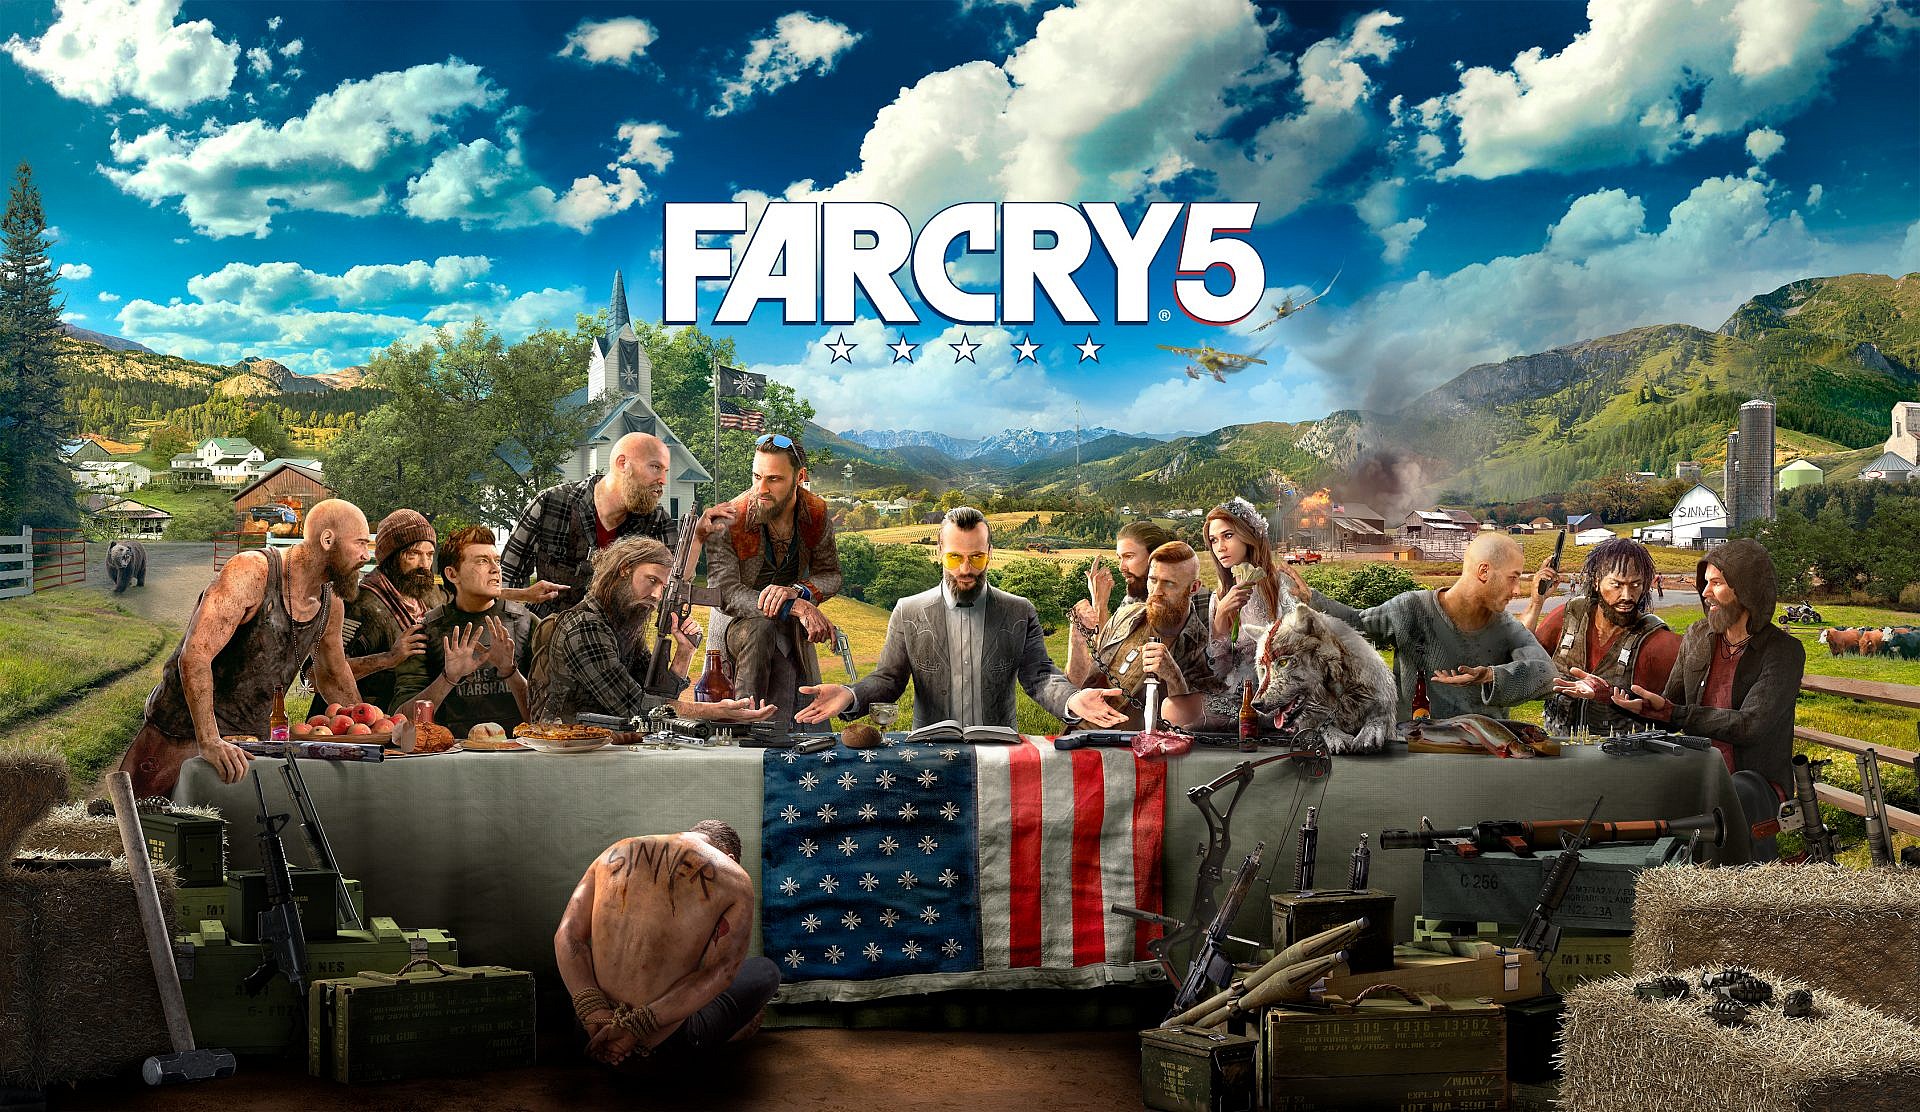 [Hands-on Preview] Far Cry 5 ข้อมูลใหม่ๆ ส่งตรงจากงาน Media Presentation ครั้งแรกในประเทศไทย !!